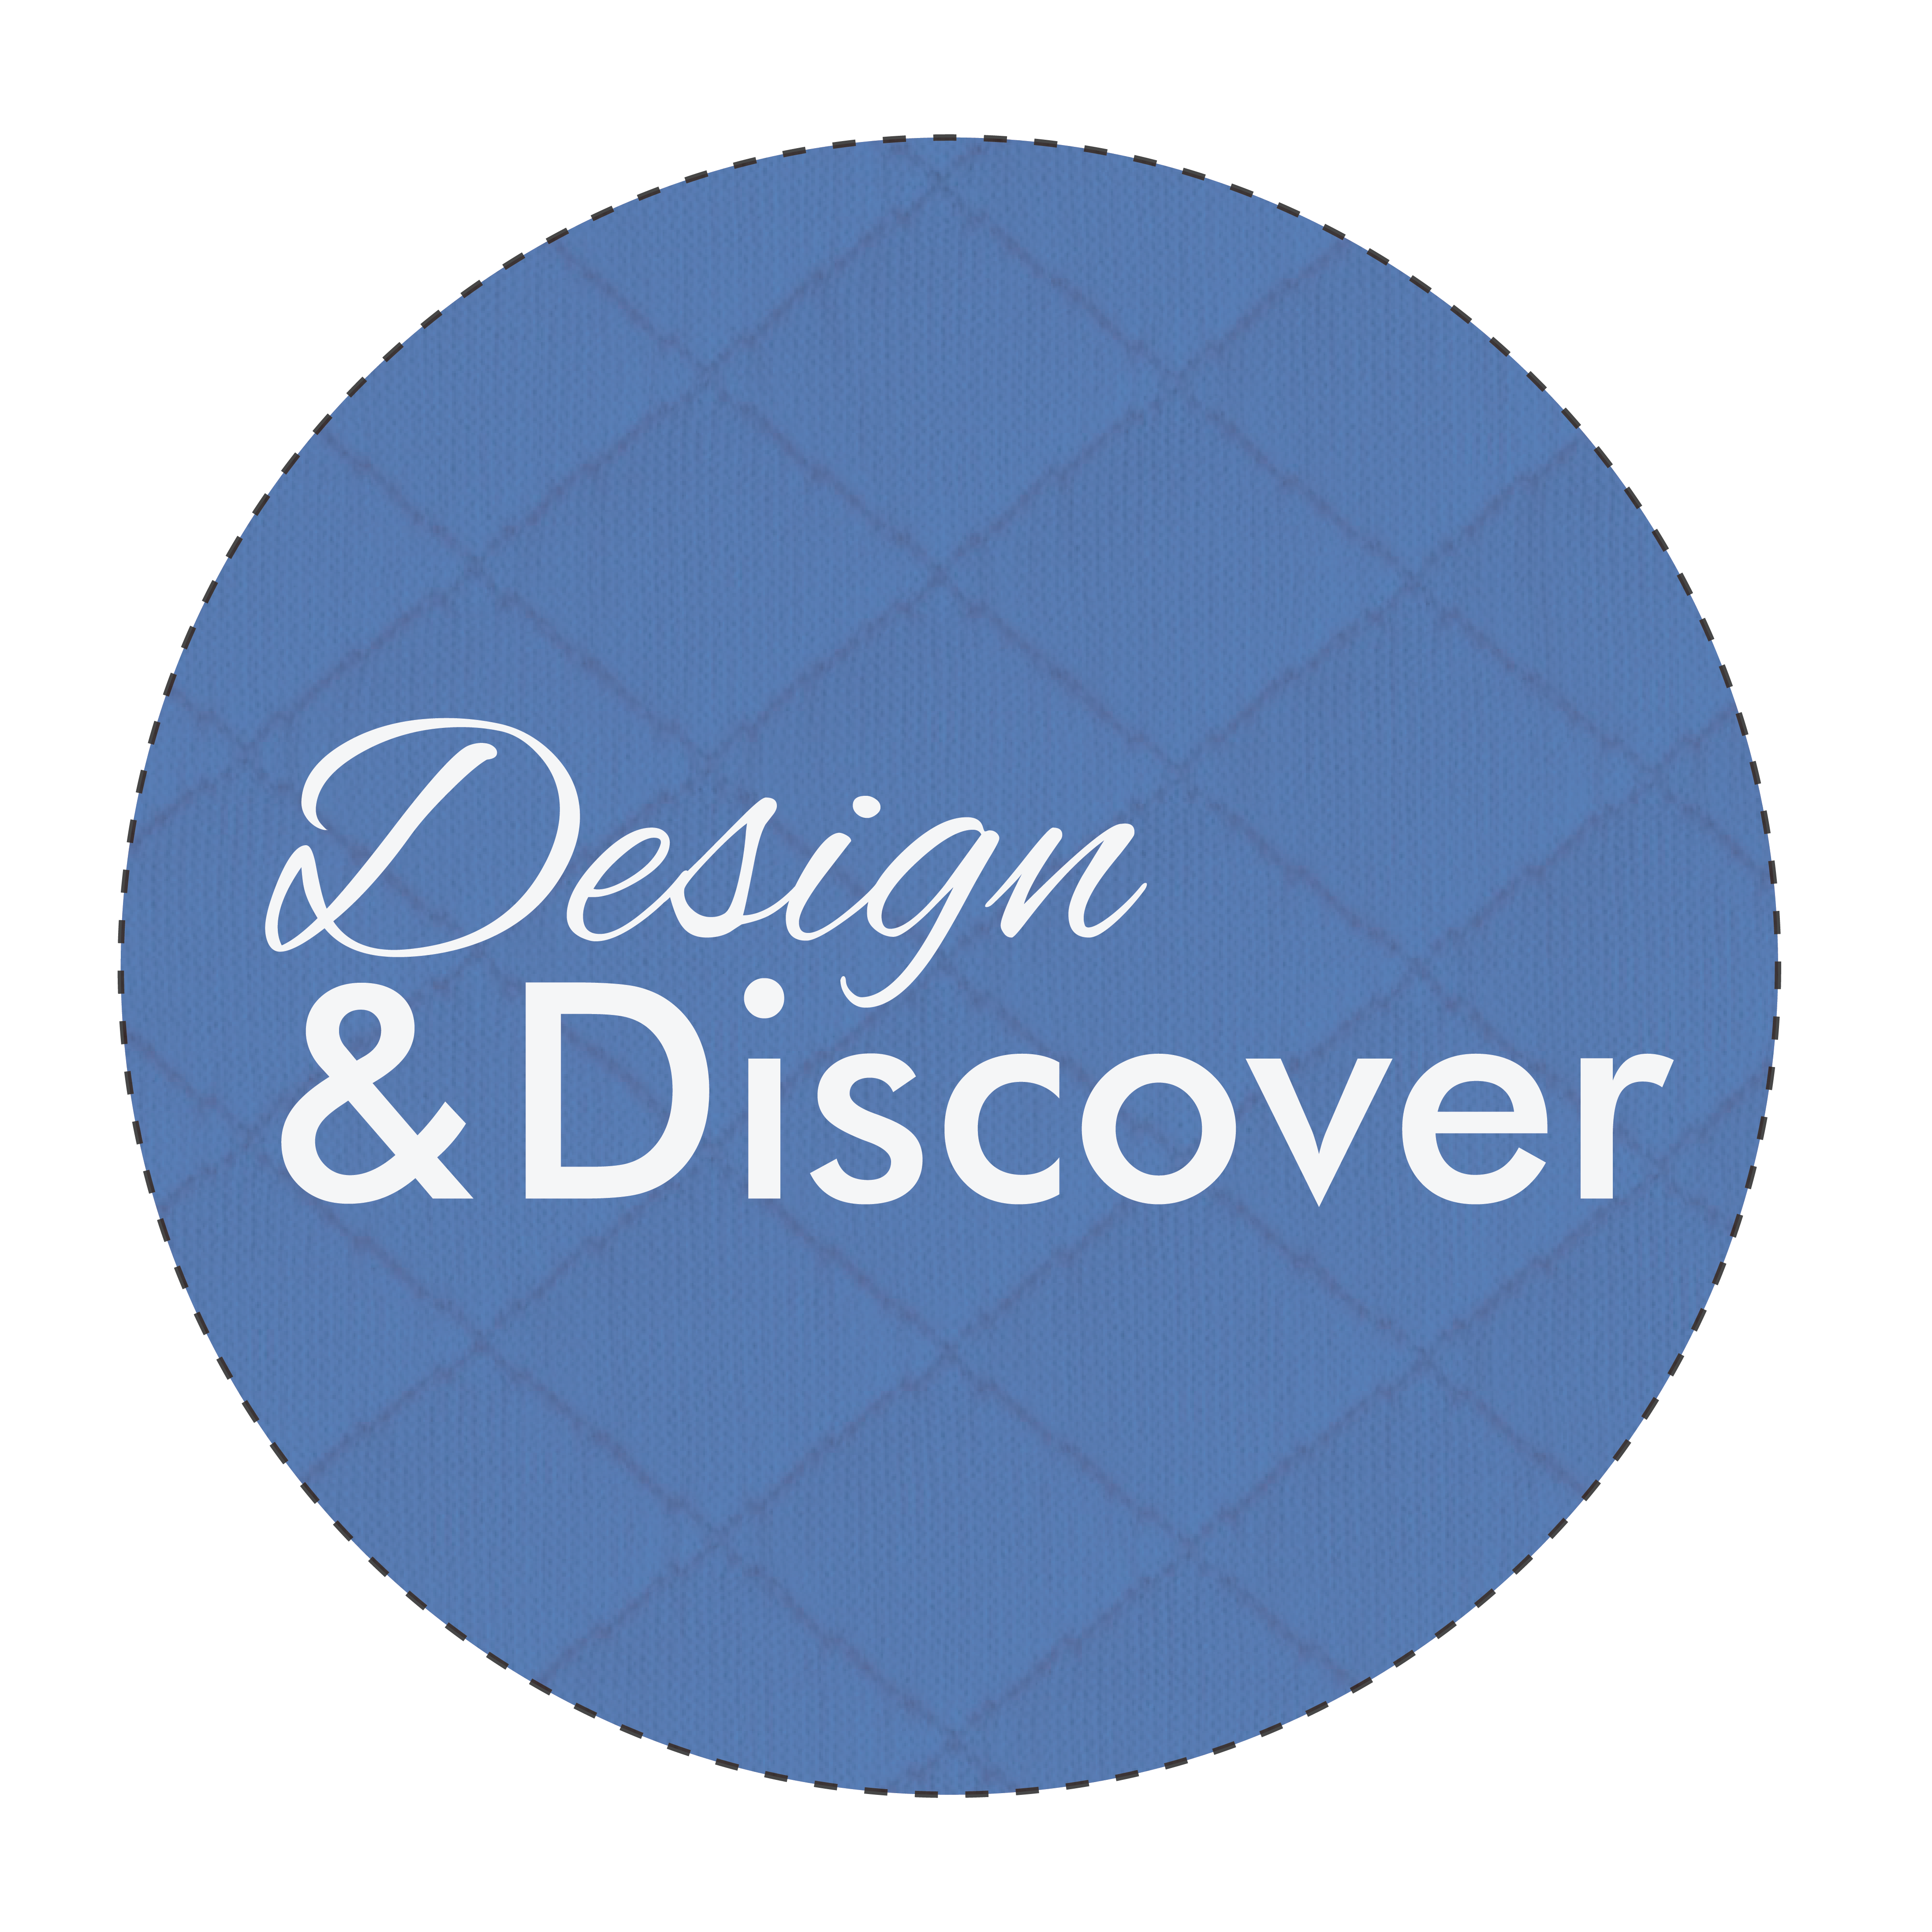 EQ8 Design & Discover